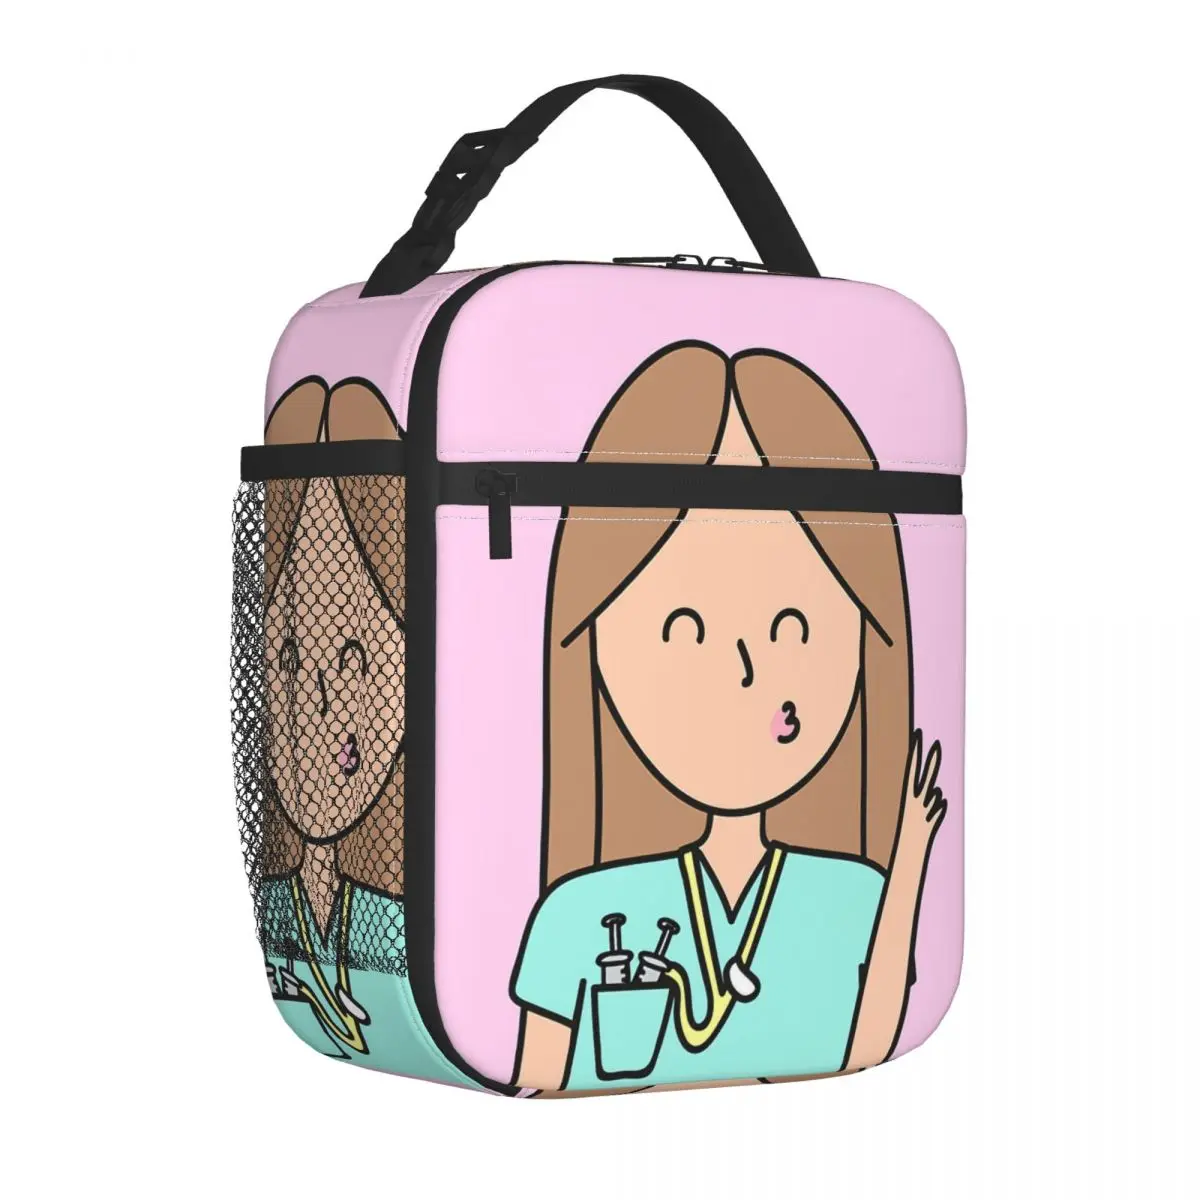 S Cooler Bag  Lunch Container Enfermera En Apuros Doctor Nurse Medical Health Tote Lunch Box College